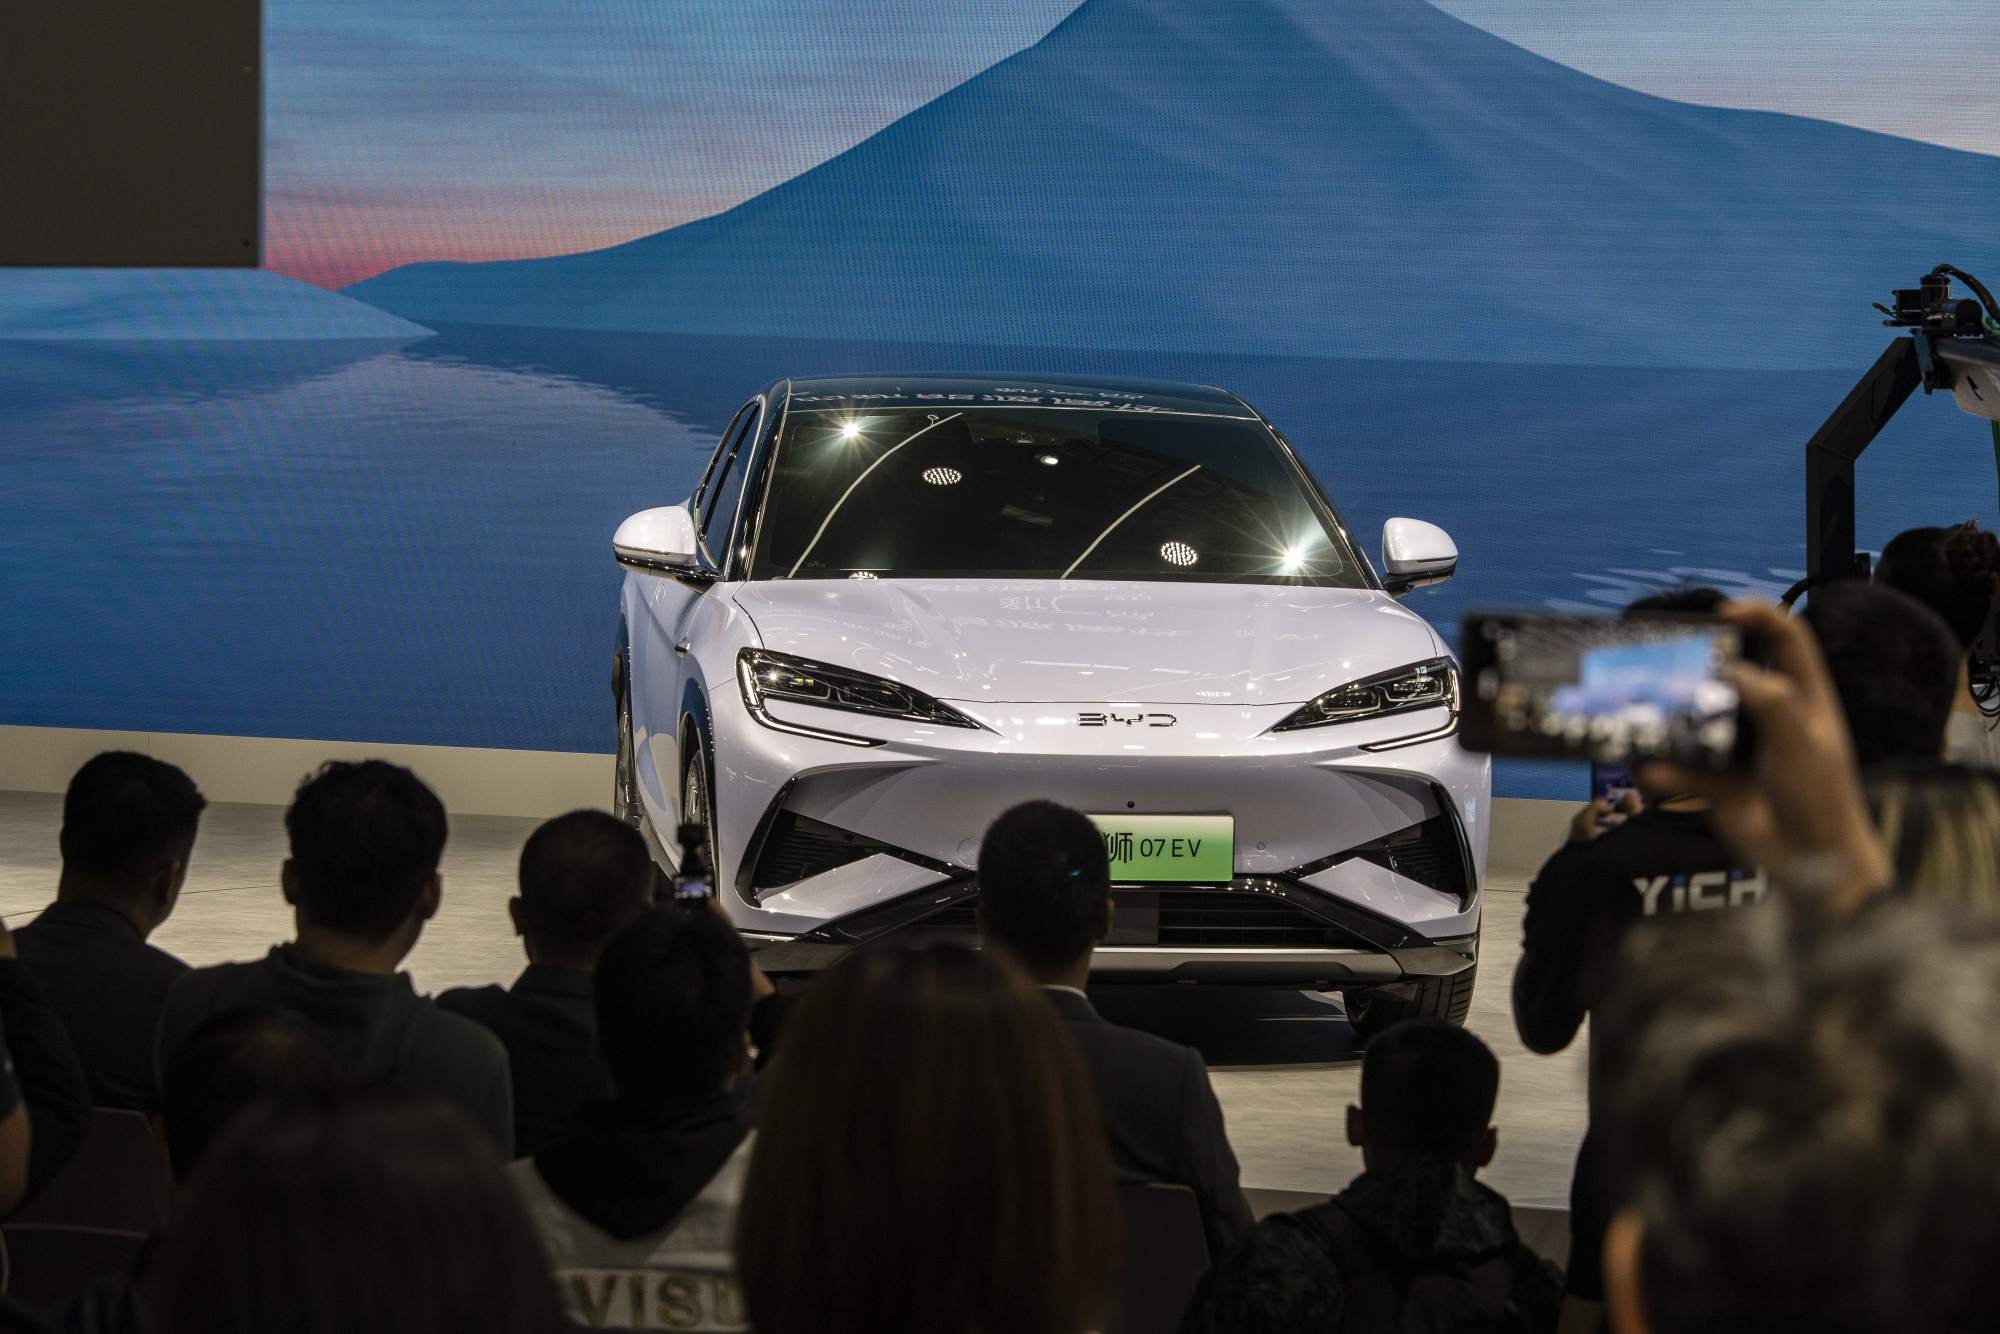 Shanghai Auto Show: An innovative center console for automotive interiors